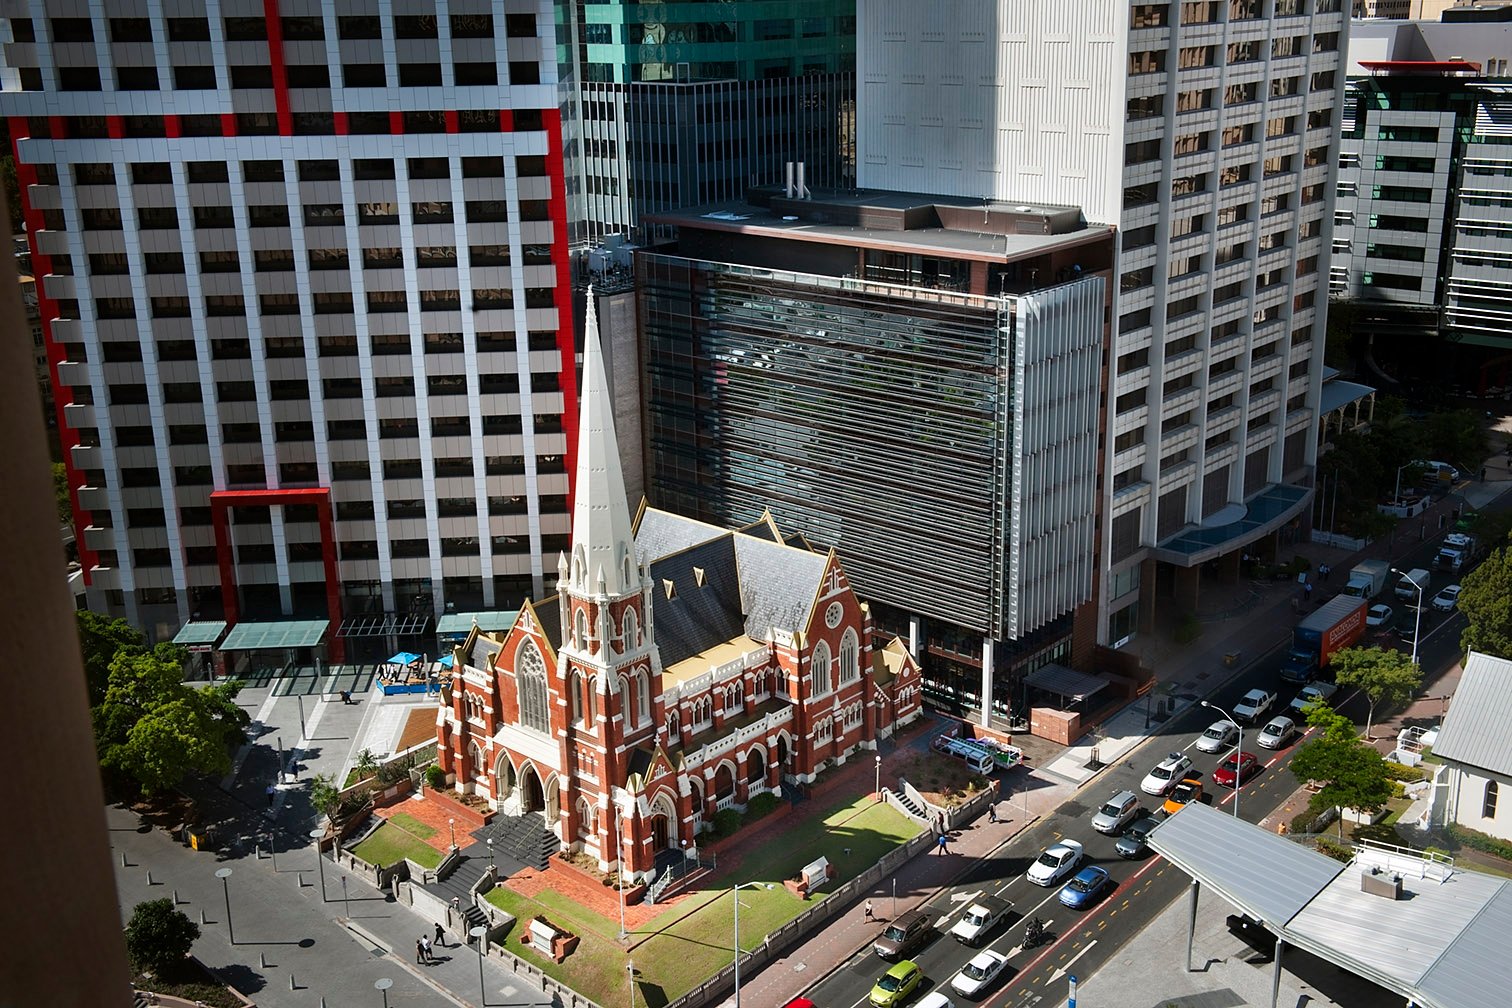 Albert Street Uniting Church from above